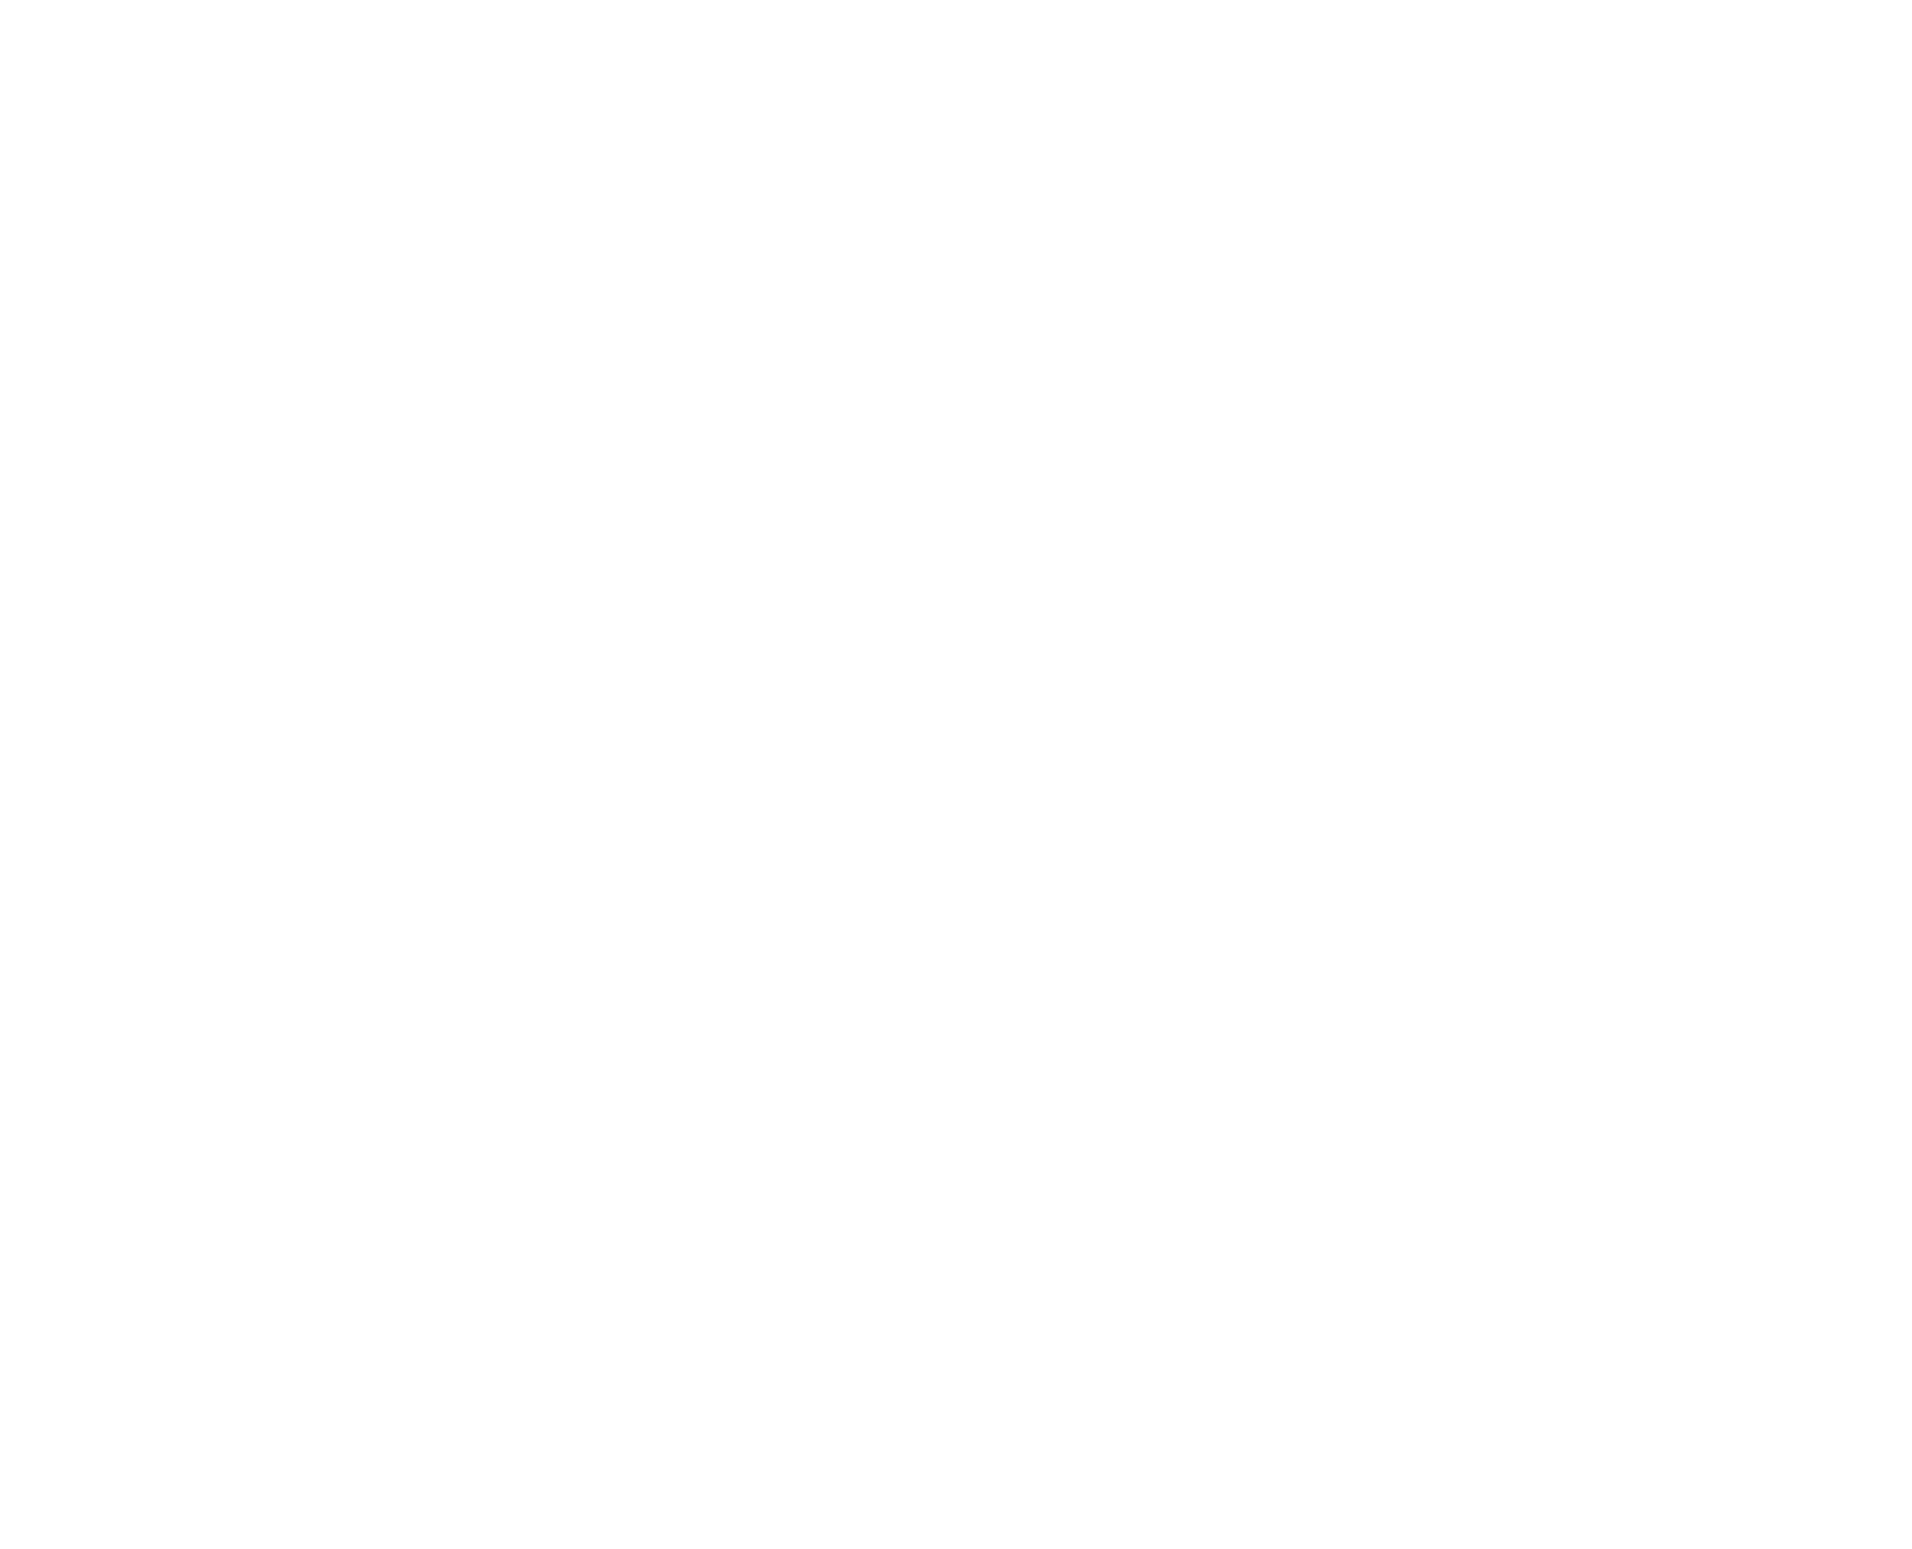 The Strait & Narrow Pacific Coast Cocktails